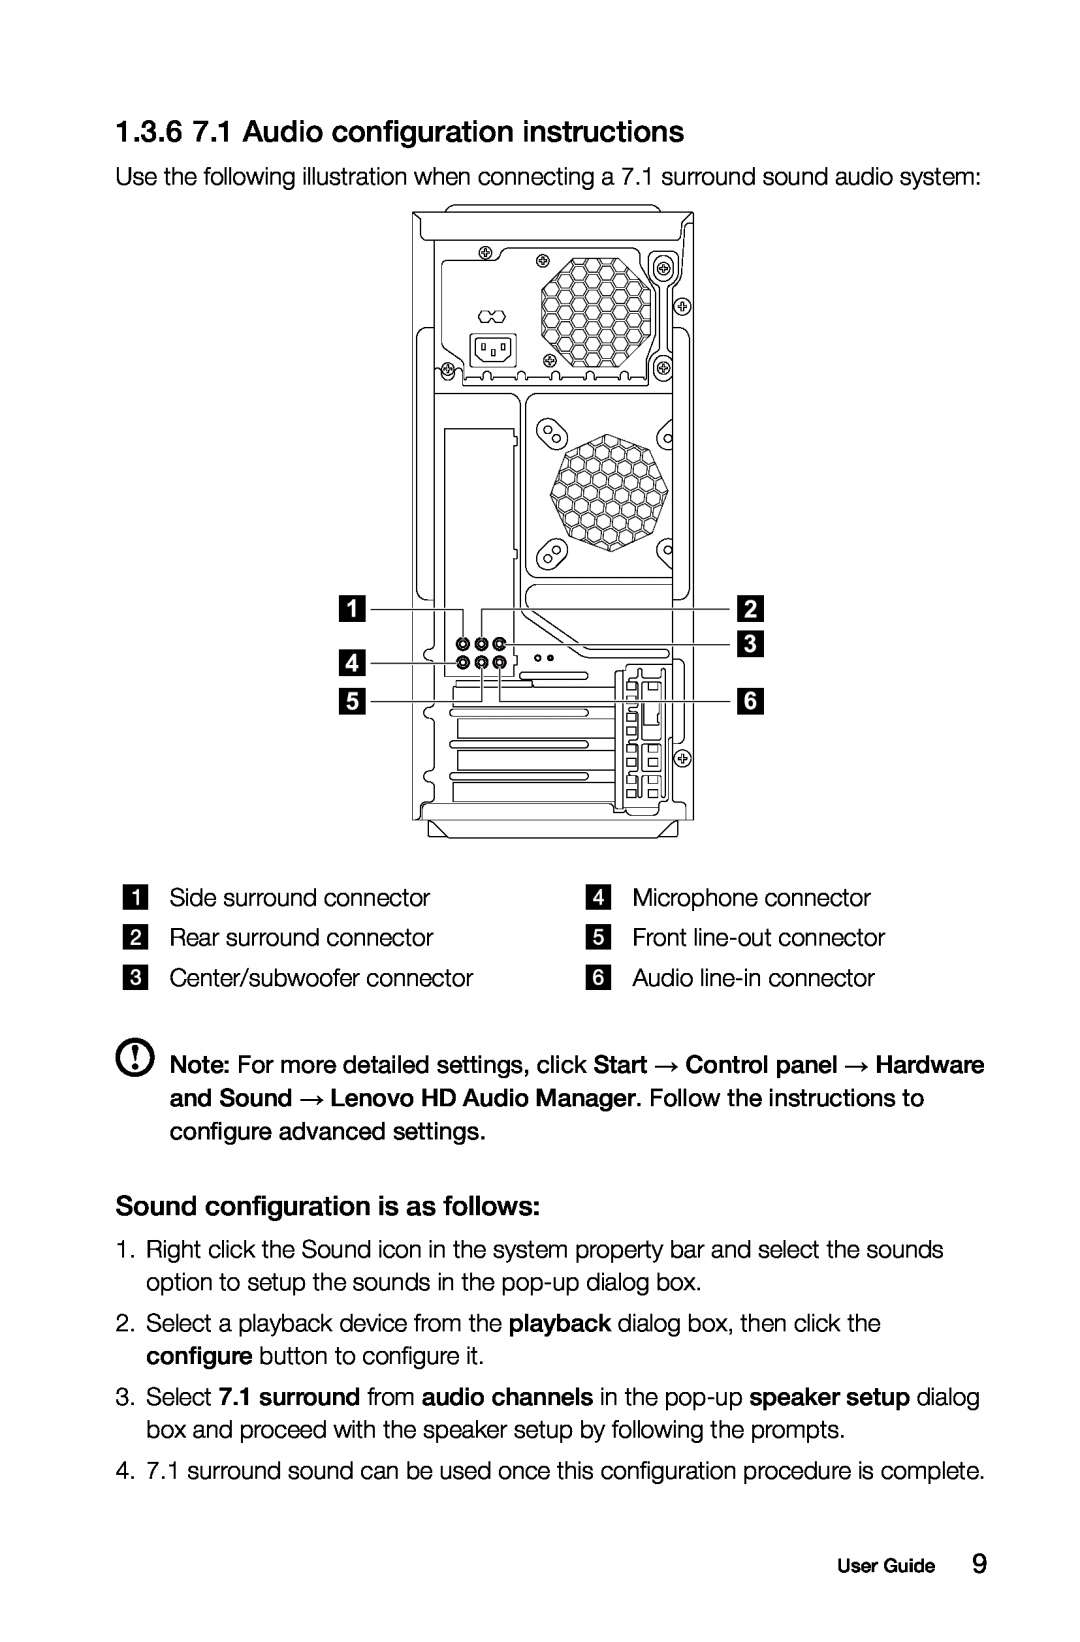 Lenovo 10066/7747, 10073/1169, 10067/7748 1.3.6 7.1 Audio configuration instructions, Sound configuration is as follows 